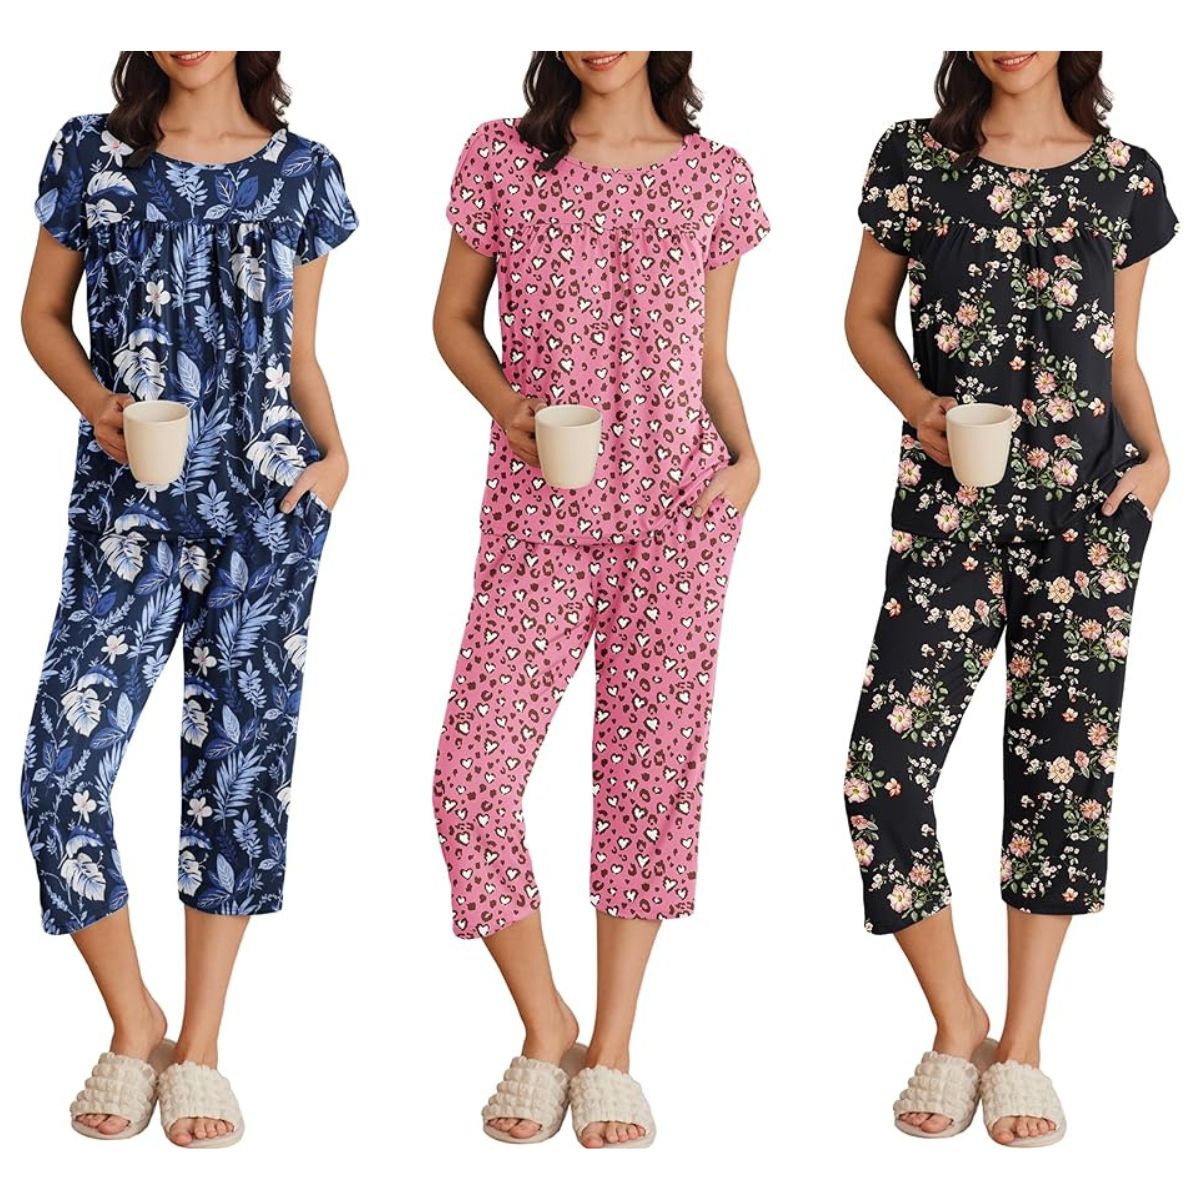 Women's 2-pc pajama sets $5+ (Reg. $19+) | Smart Savers